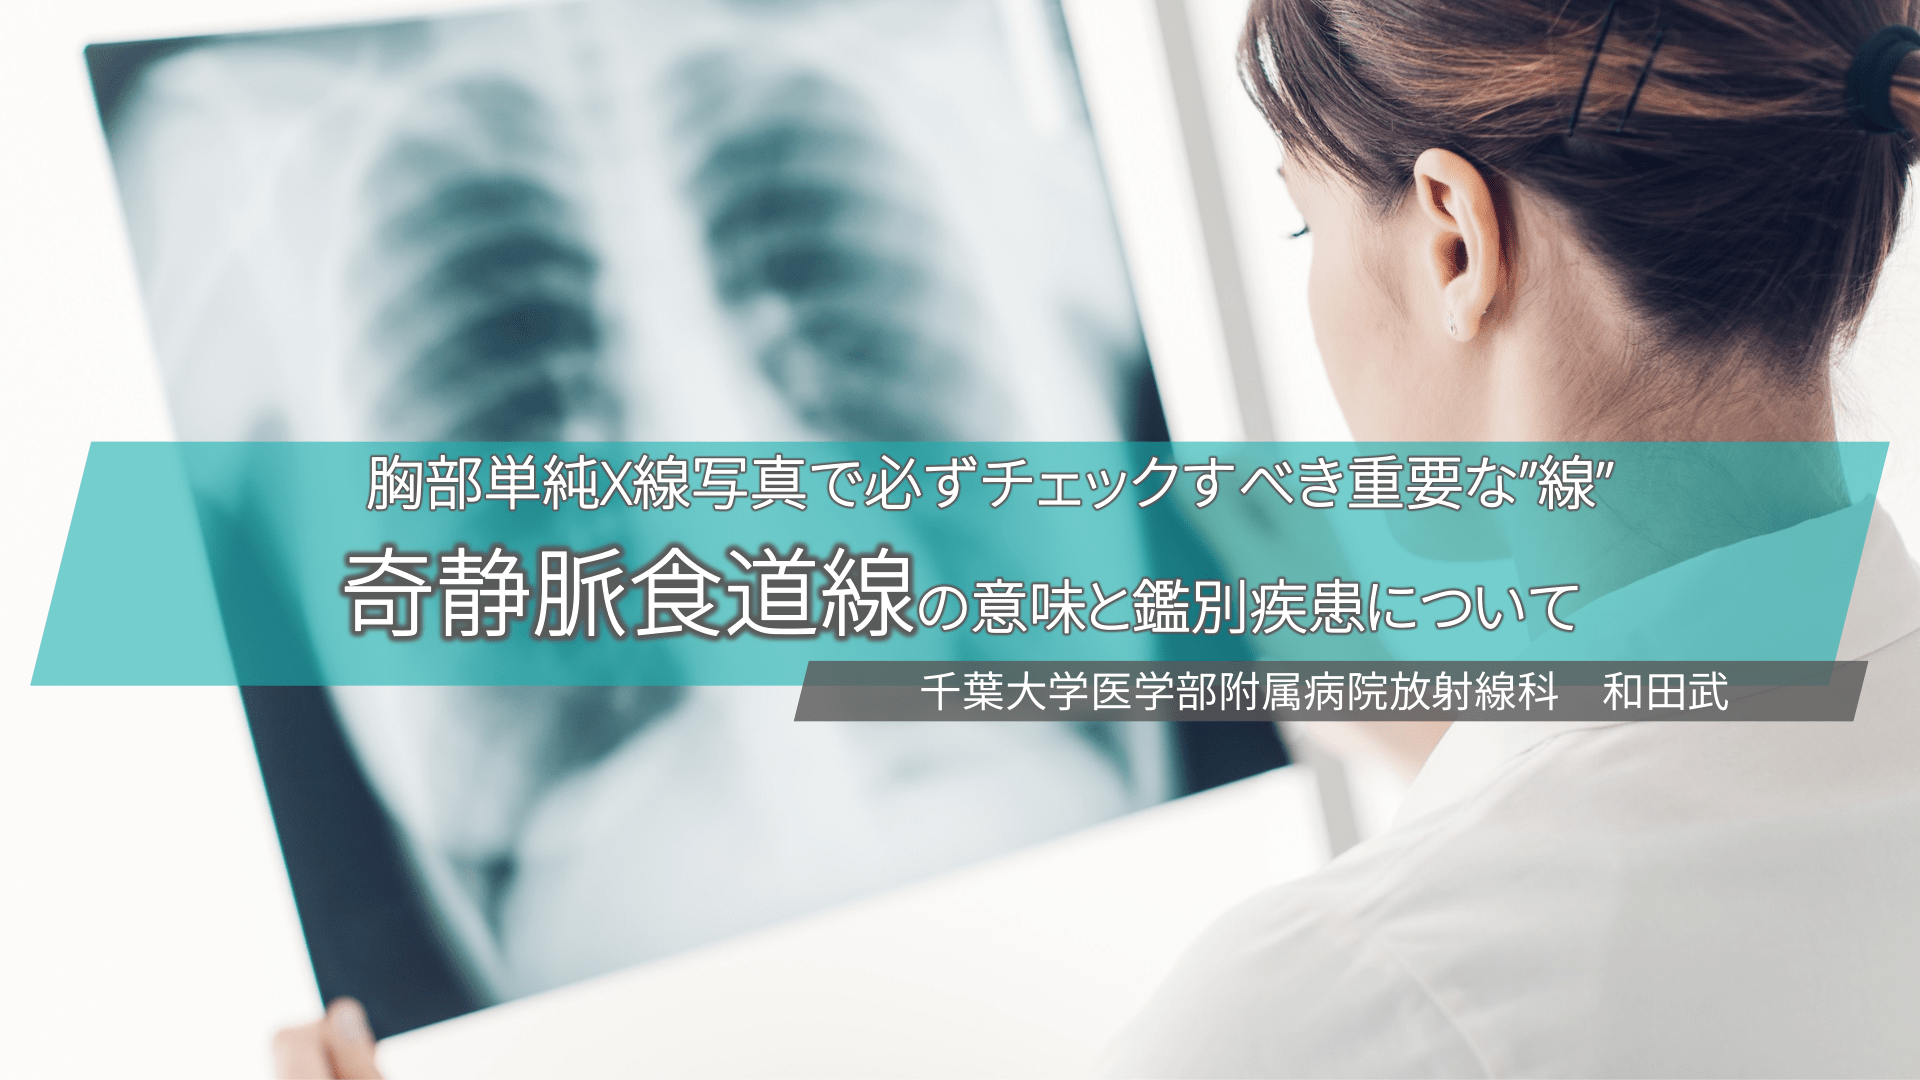 胸部単純X線写真の重要な”線”　「奇静脈食道線」の意味と鑑別疾患について L1.png